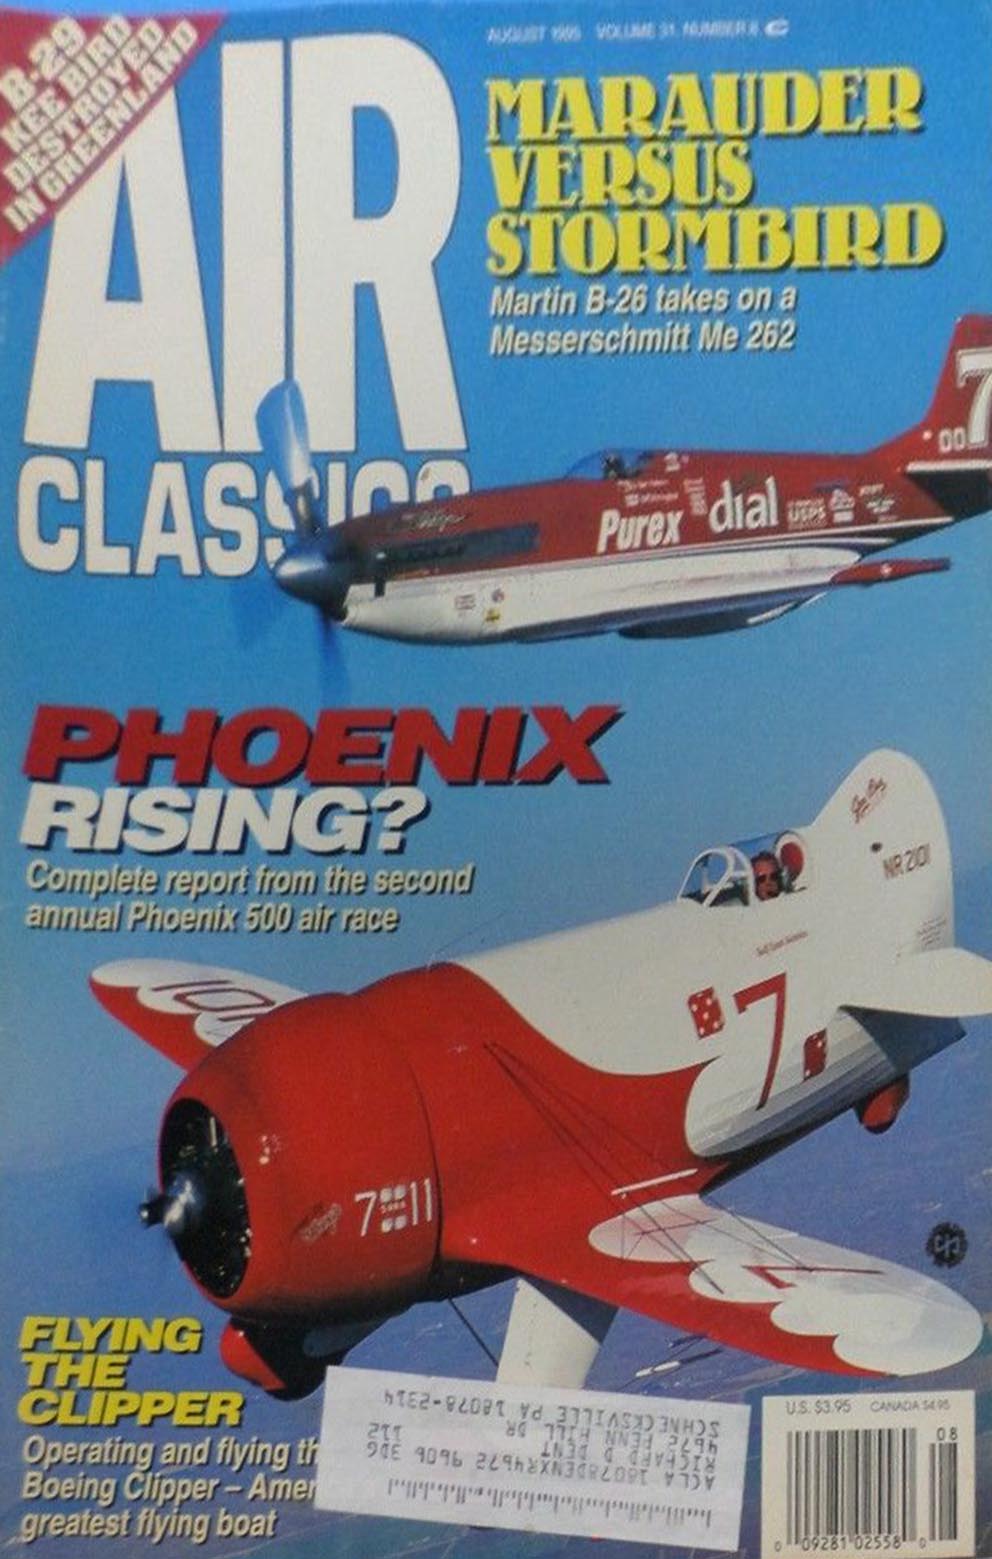 Air Classics August 1995 magazine back issue Air Classics magizine back copy 